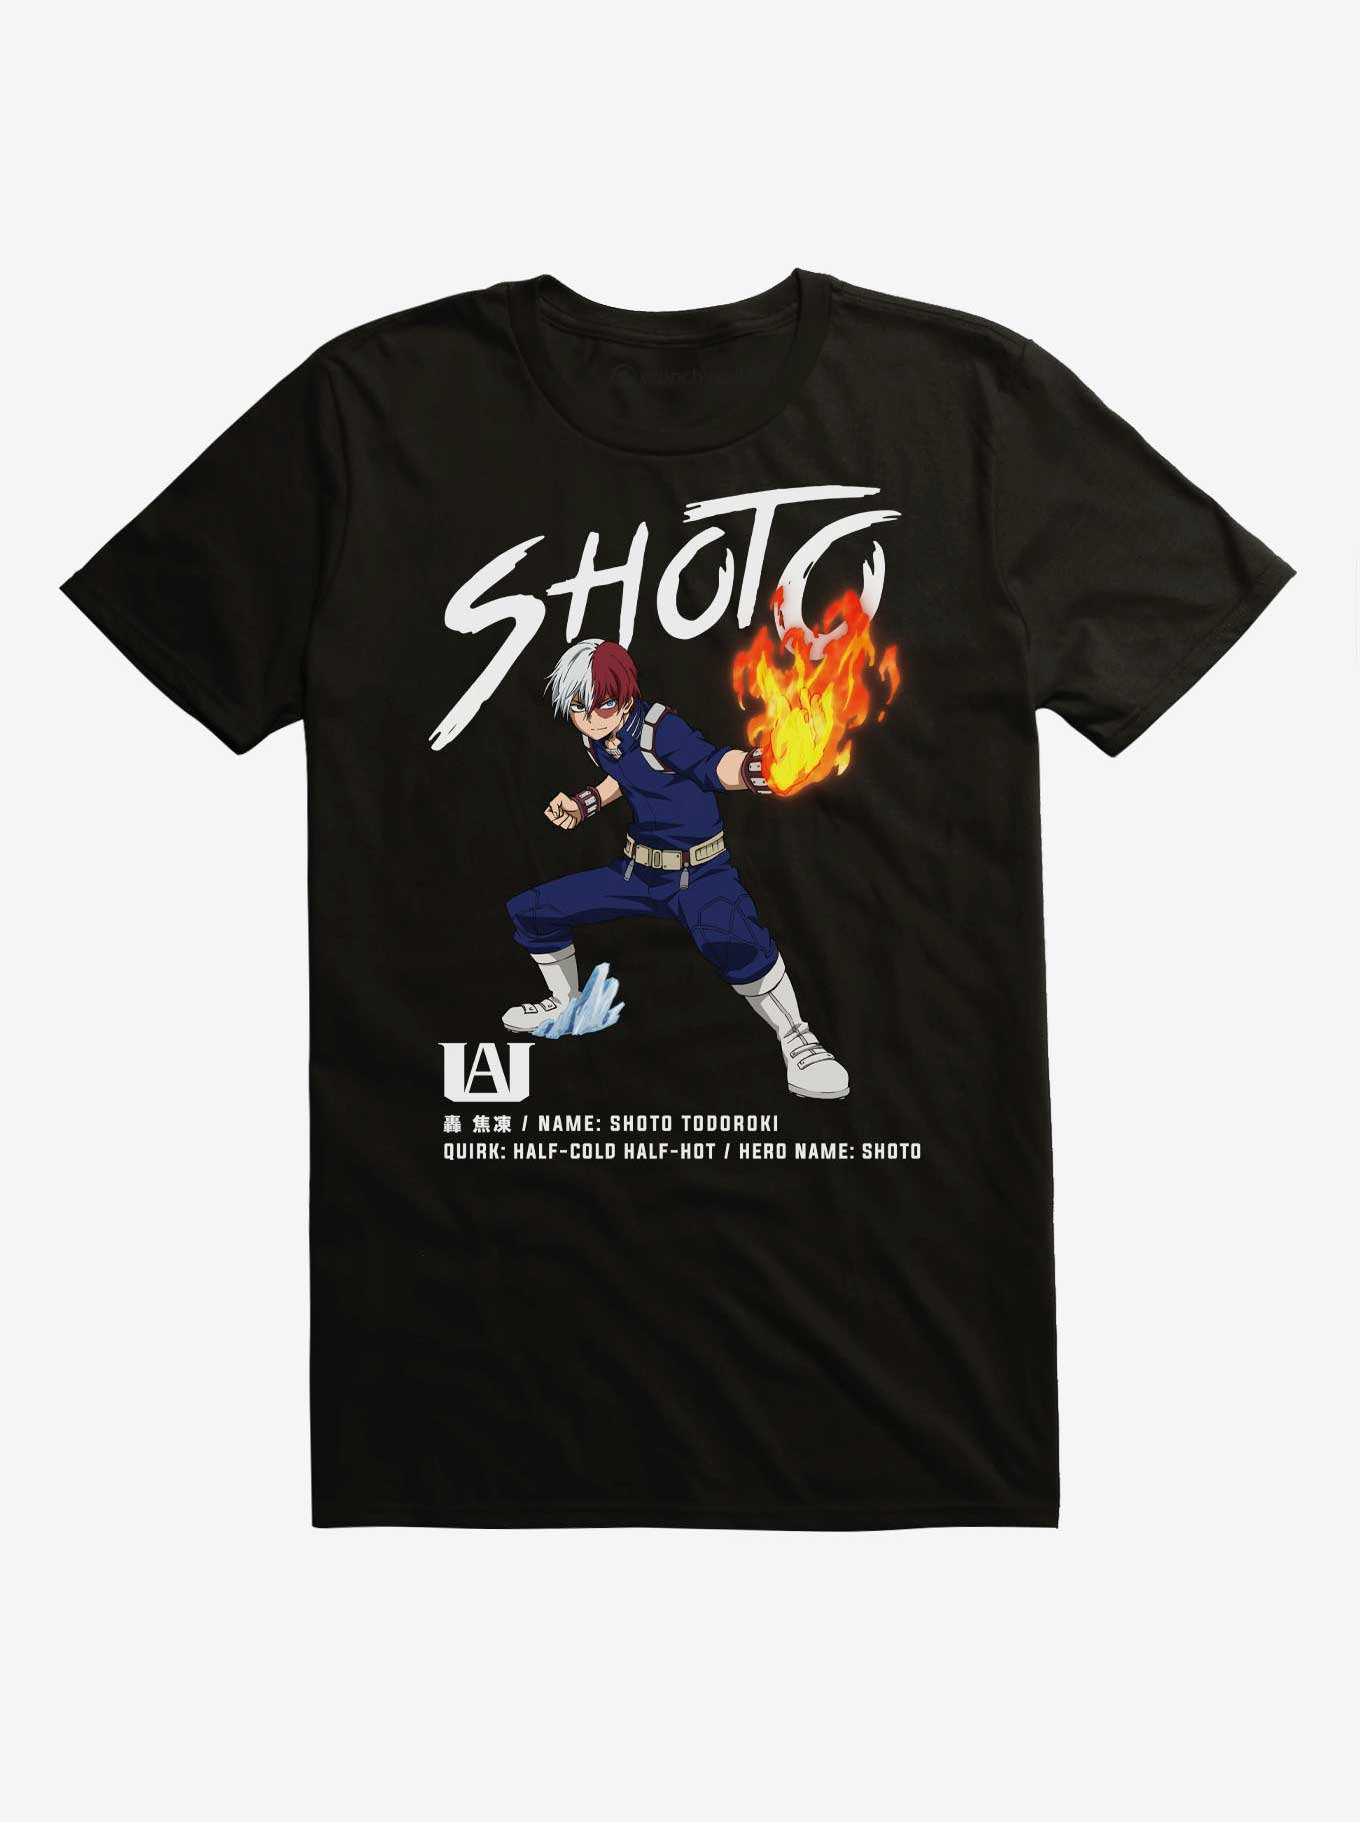 My Hero Academia Shoto Todoroki Quirk T-Shirt, , hi-res